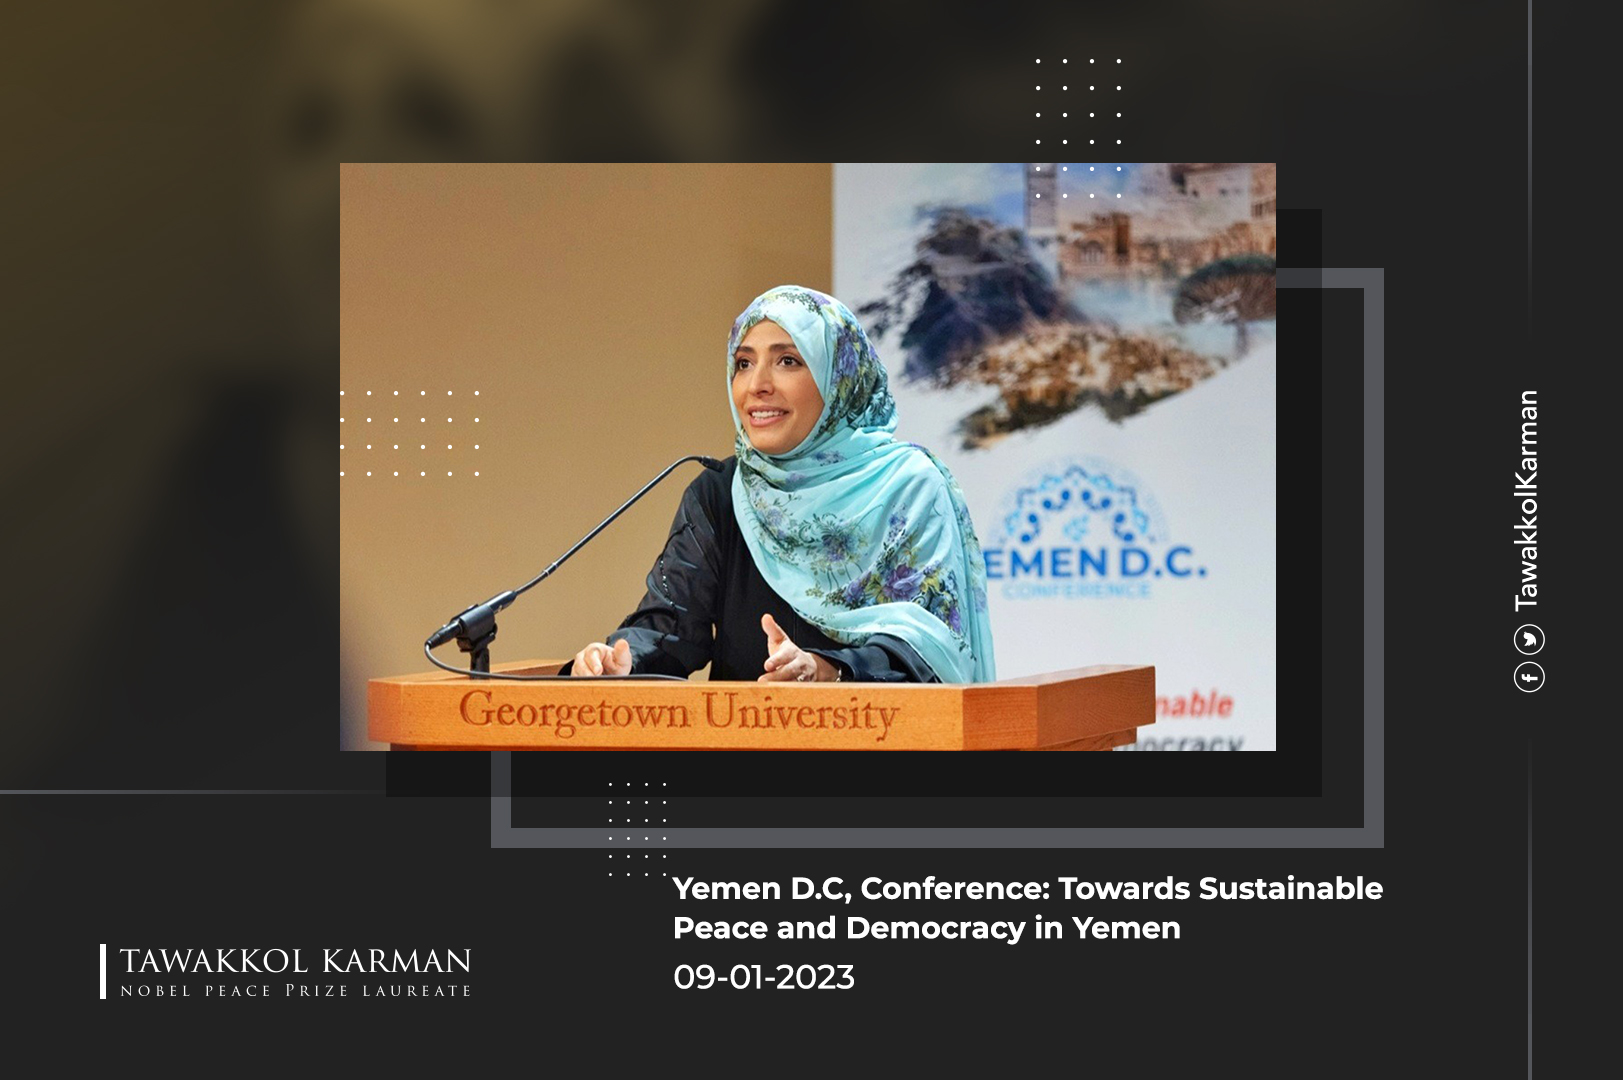 Tawakkol Karman Speech at: Yemen D.C, Conference: Towards Sustainable Peace and Democracy in Yemen